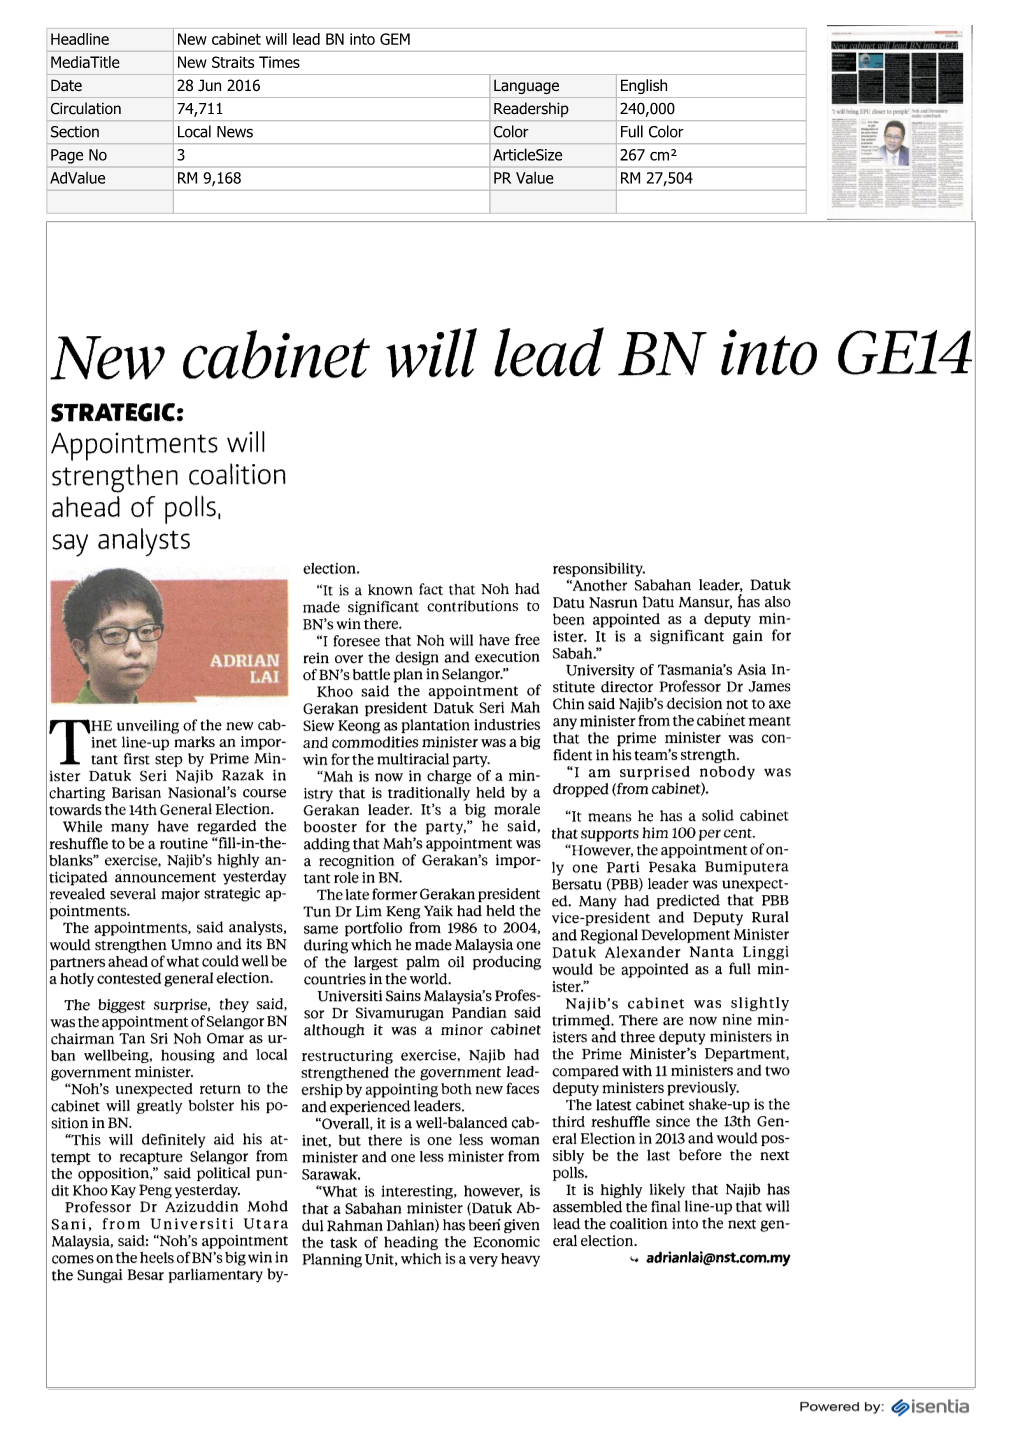 New Cabinet Will Lead BN Into